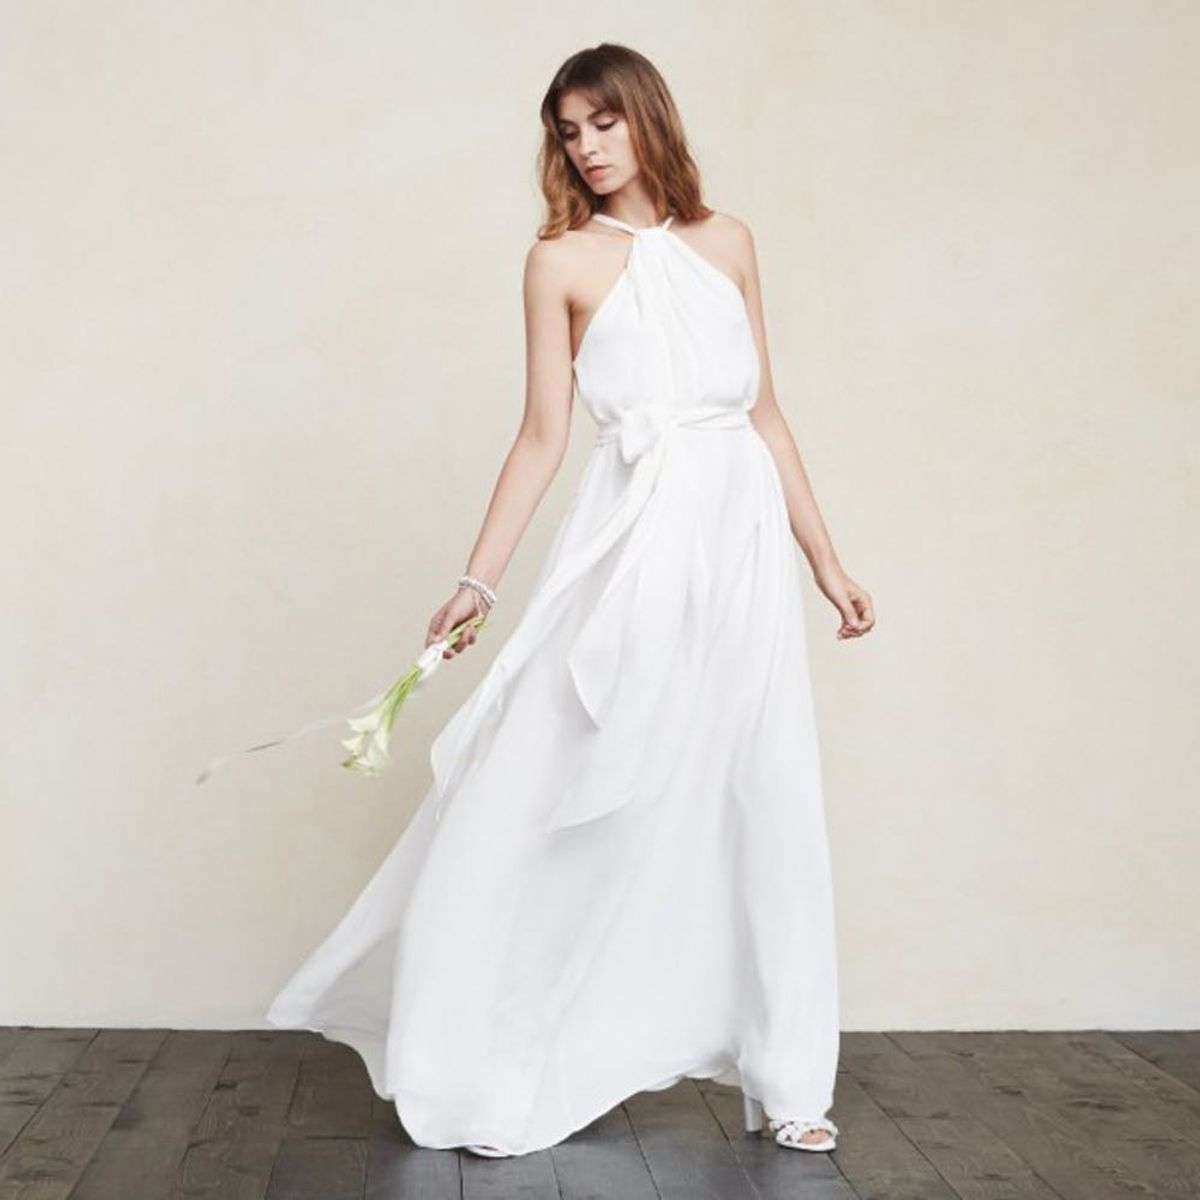 14 Stunning Wedding Dresses Under $500